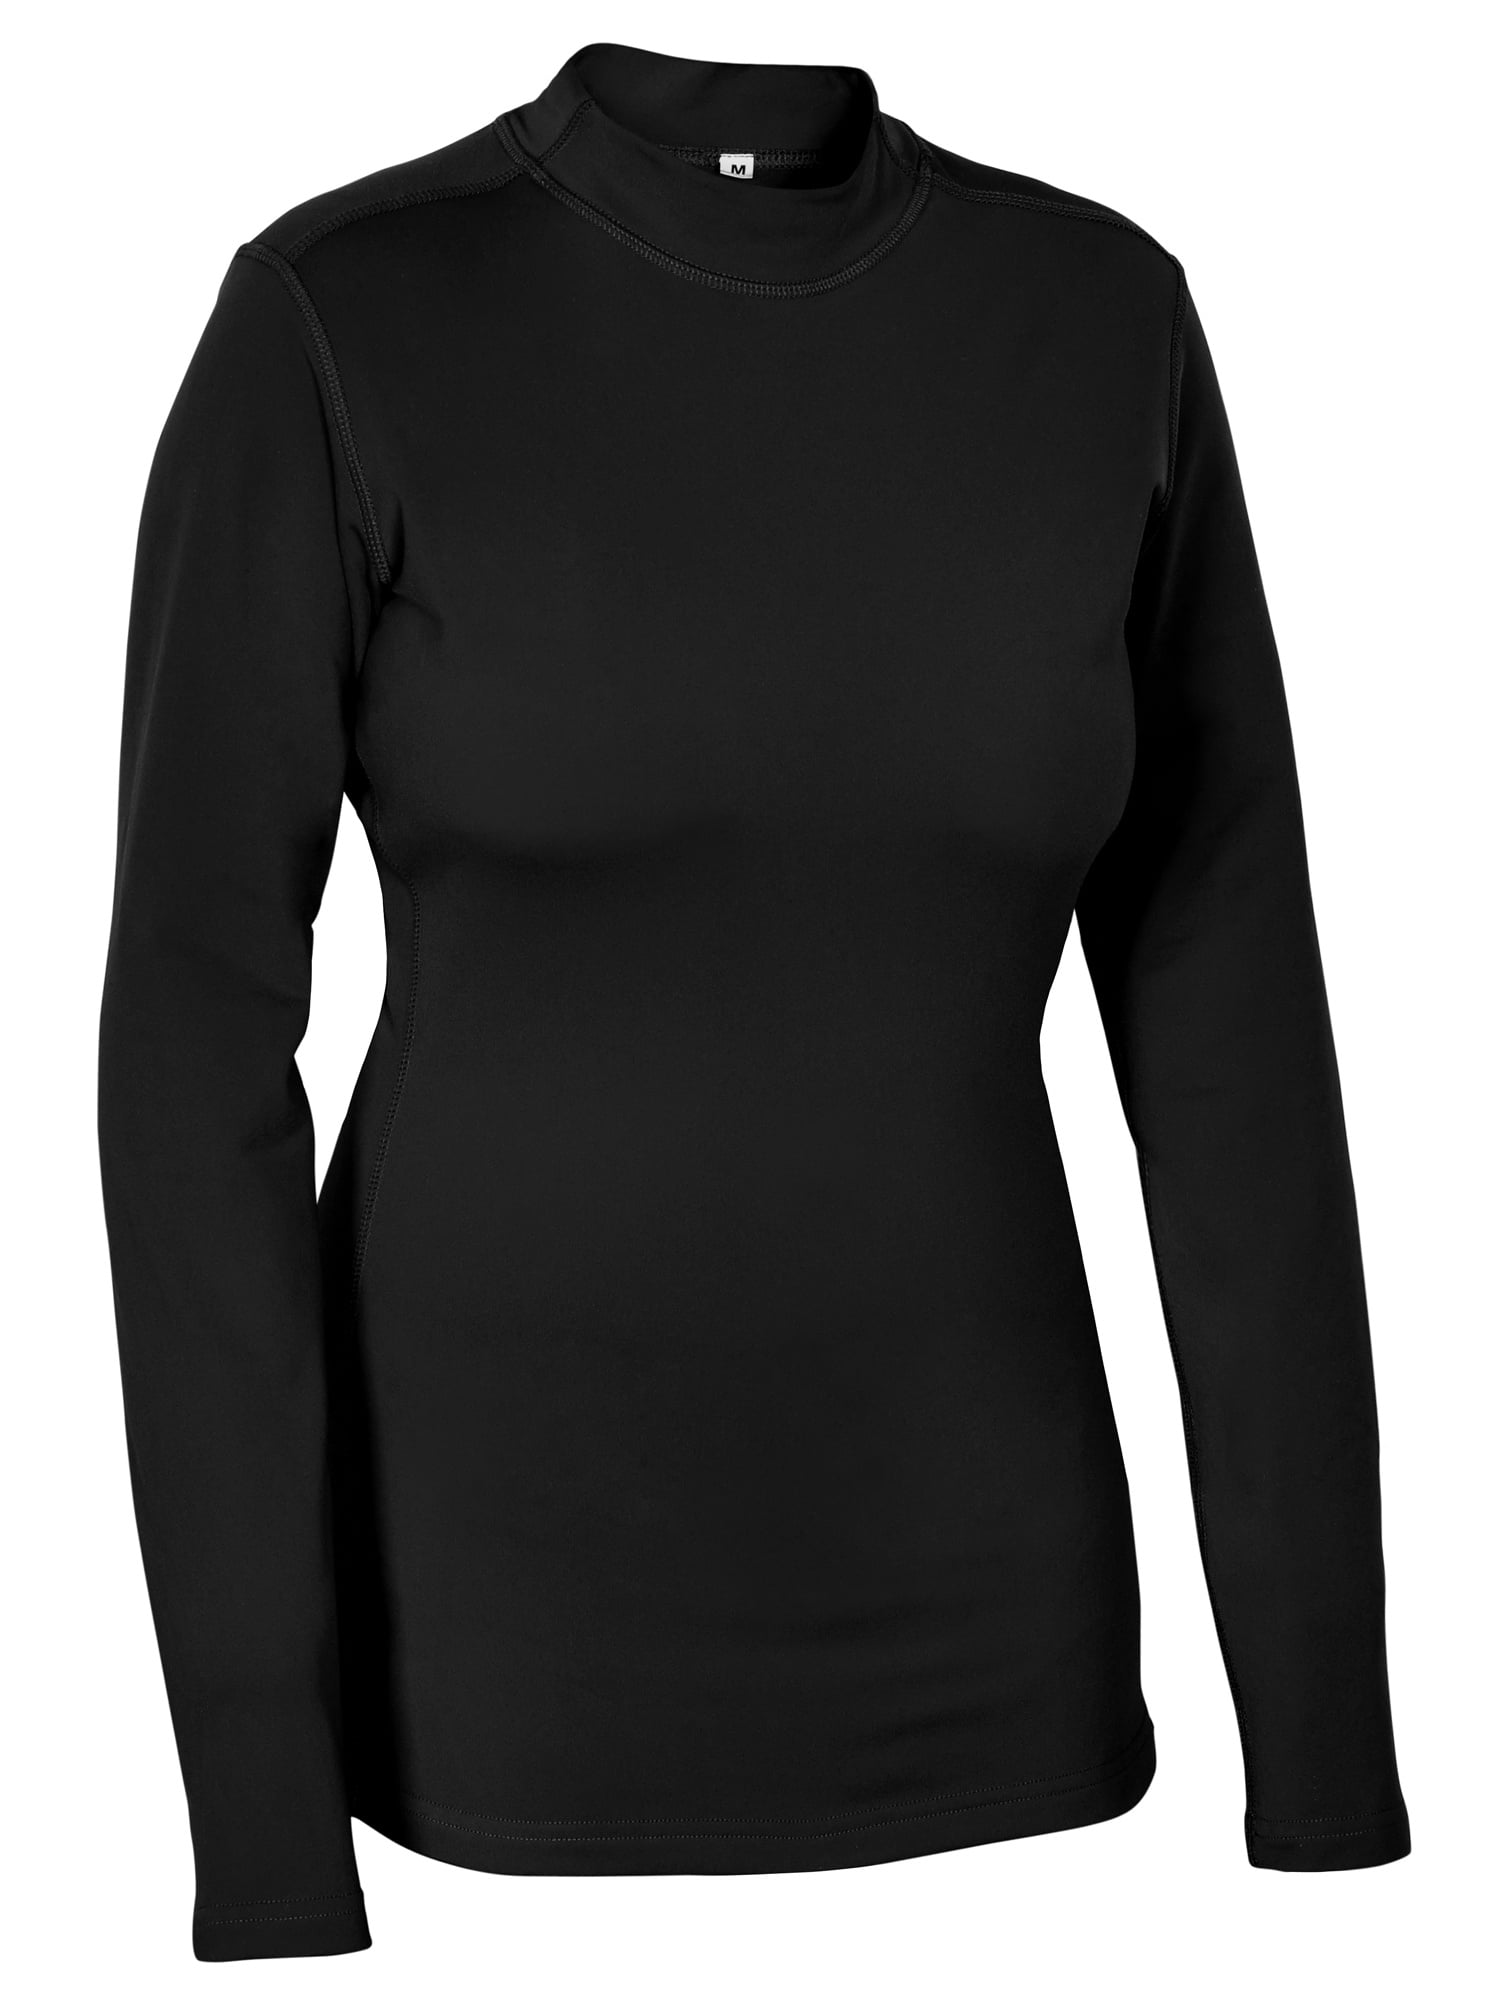 Download Xtreemgear - Women's Fleece Thermal Mock Neck Full Sleeves ...